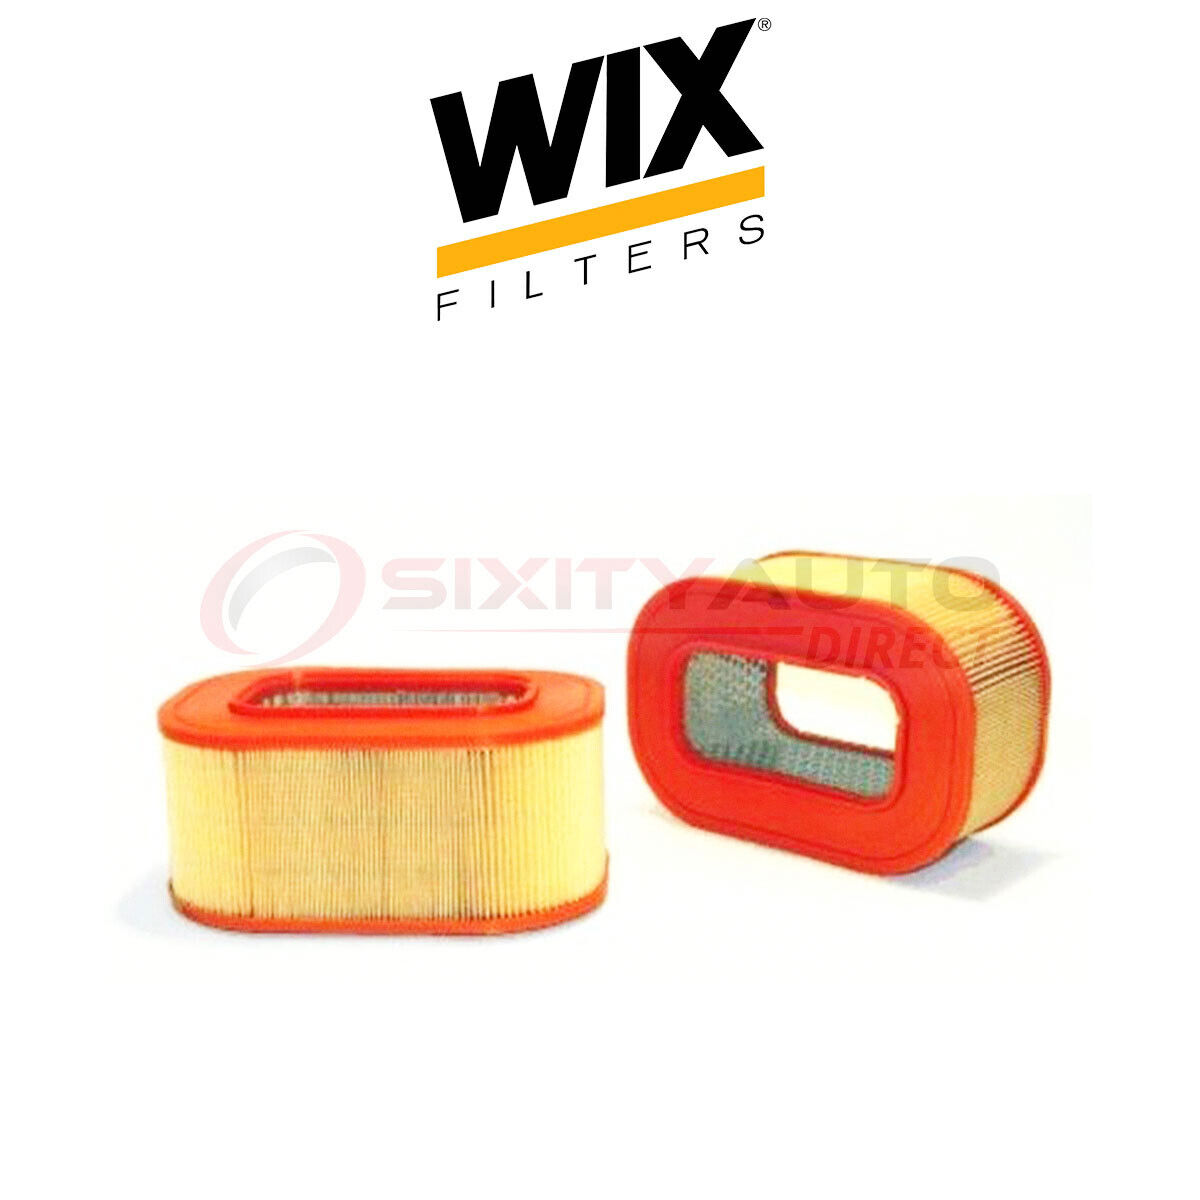 WIX Air Filter for 1990-1991 Mercedes-Benz 350SDL 3.4L L6 - Filtration sj